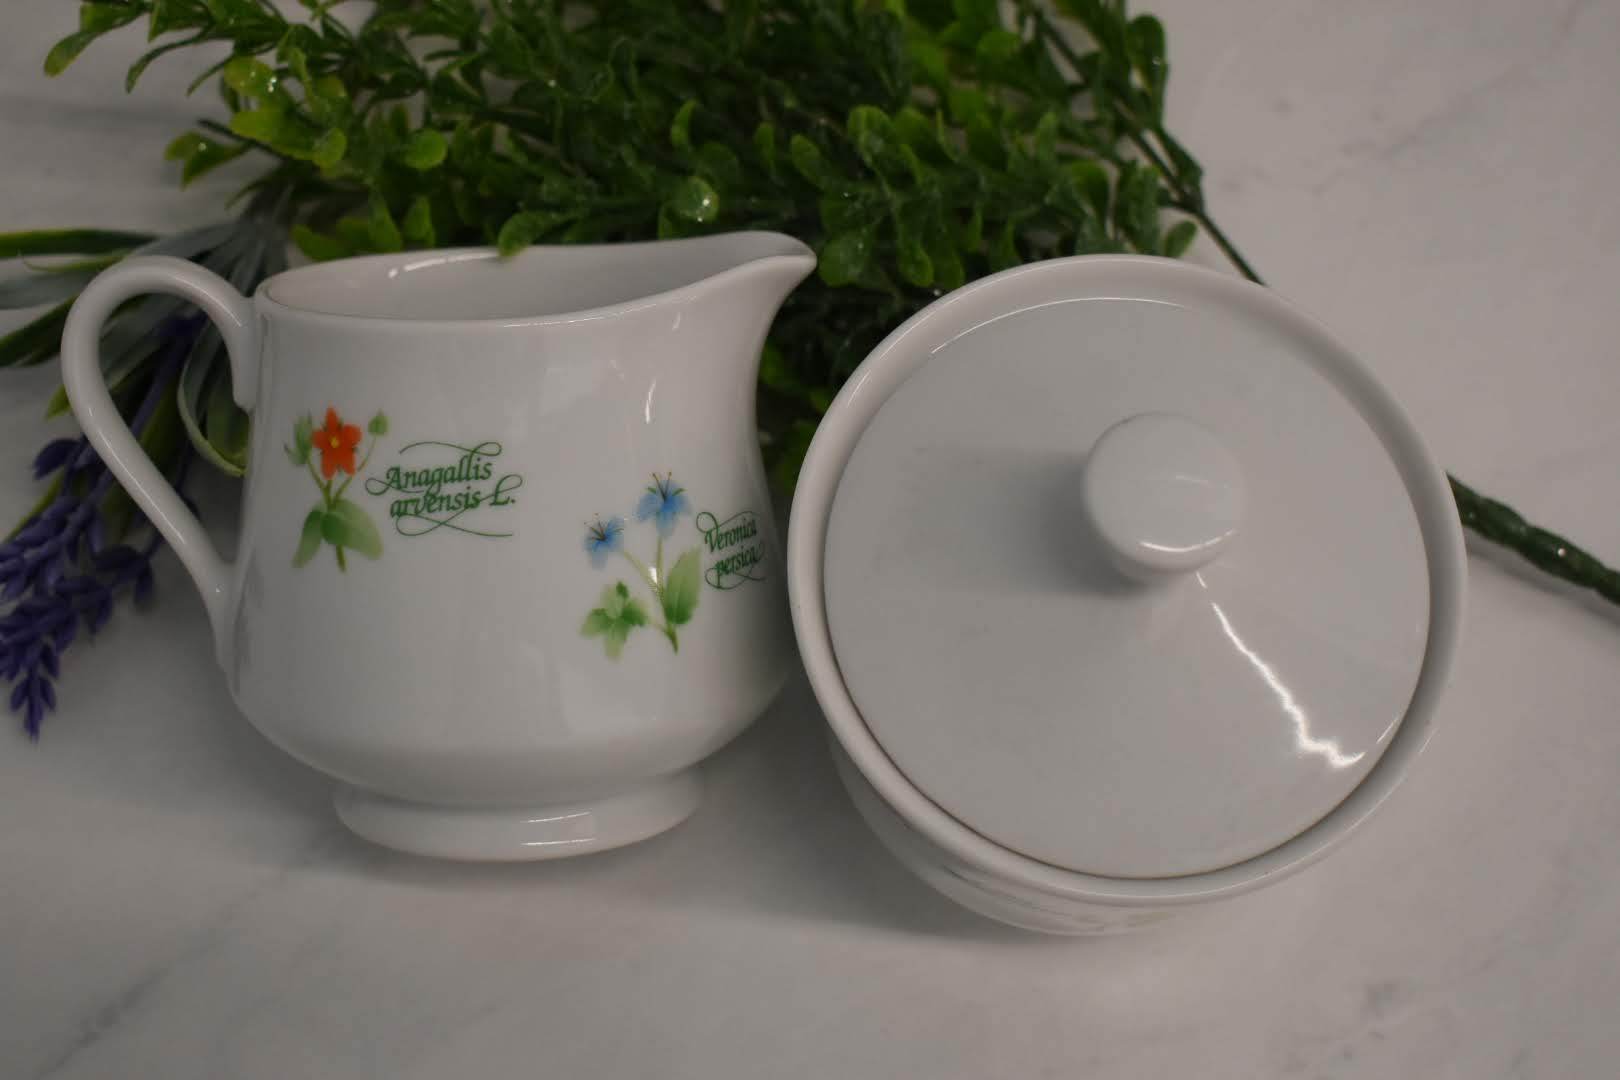 Anchor Hocking Fine Porcelain China - Botanical Floral Pattern - Sugar and Creamer Bowl - Mid Century